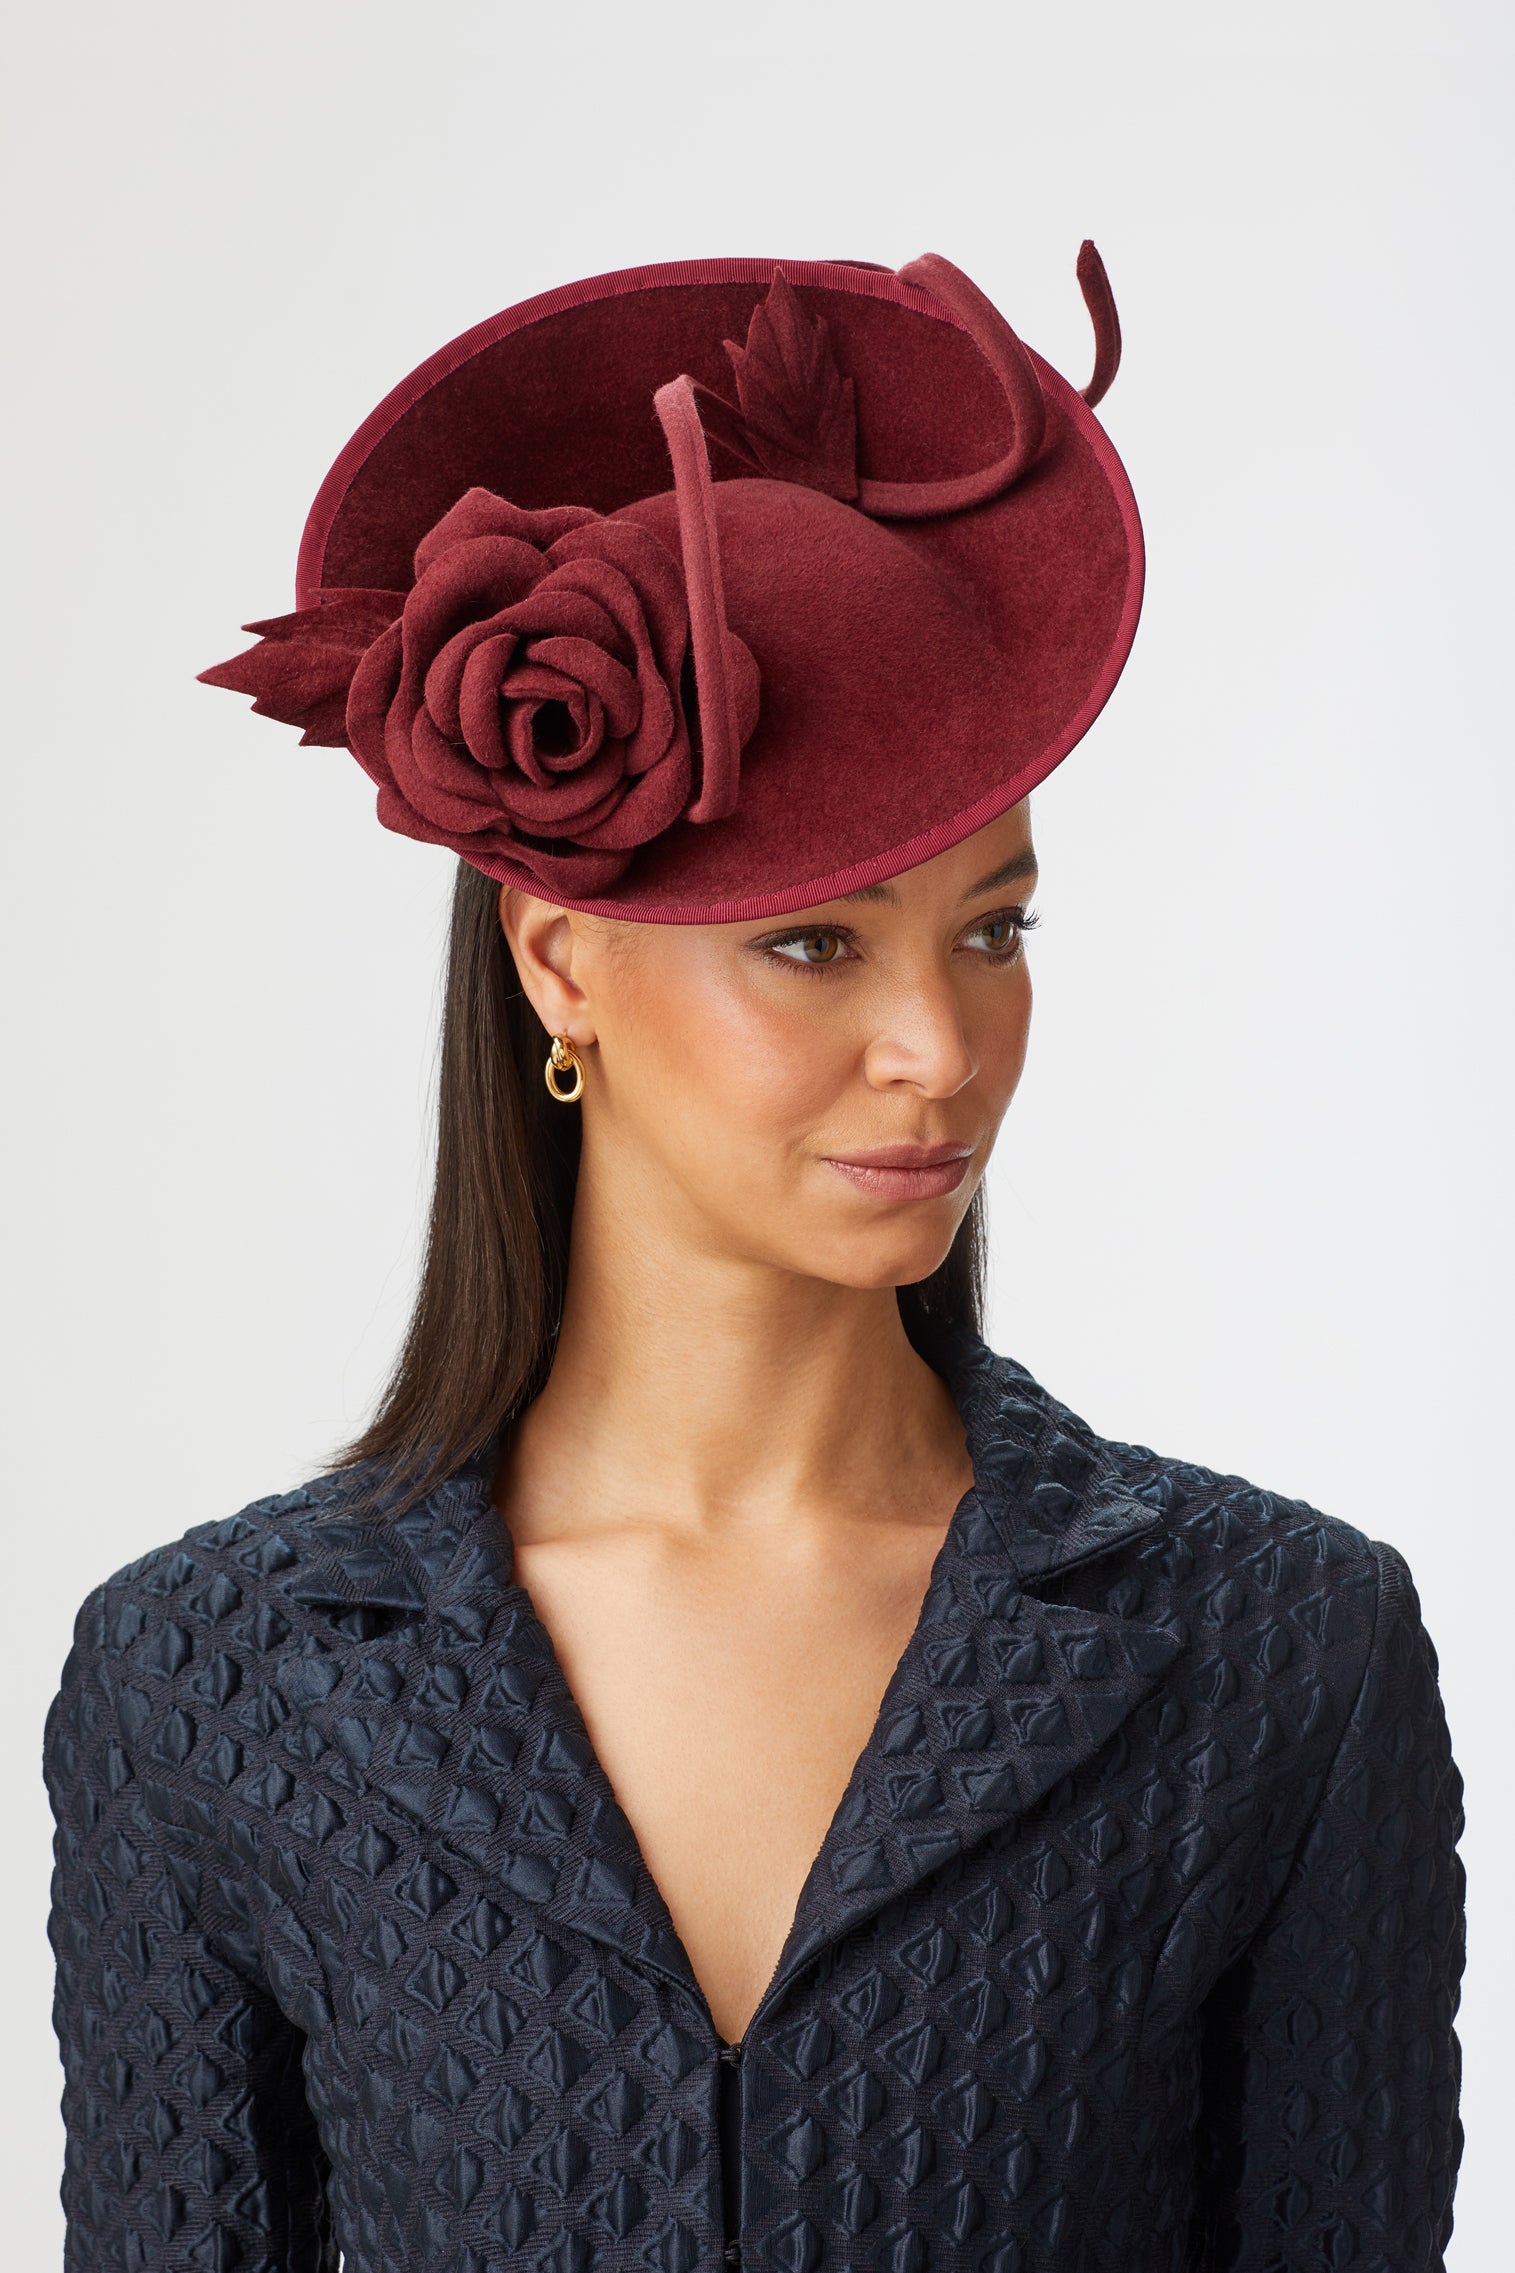 Belgravia Rose Hat - Products - Lock & Co. Hatters London UK